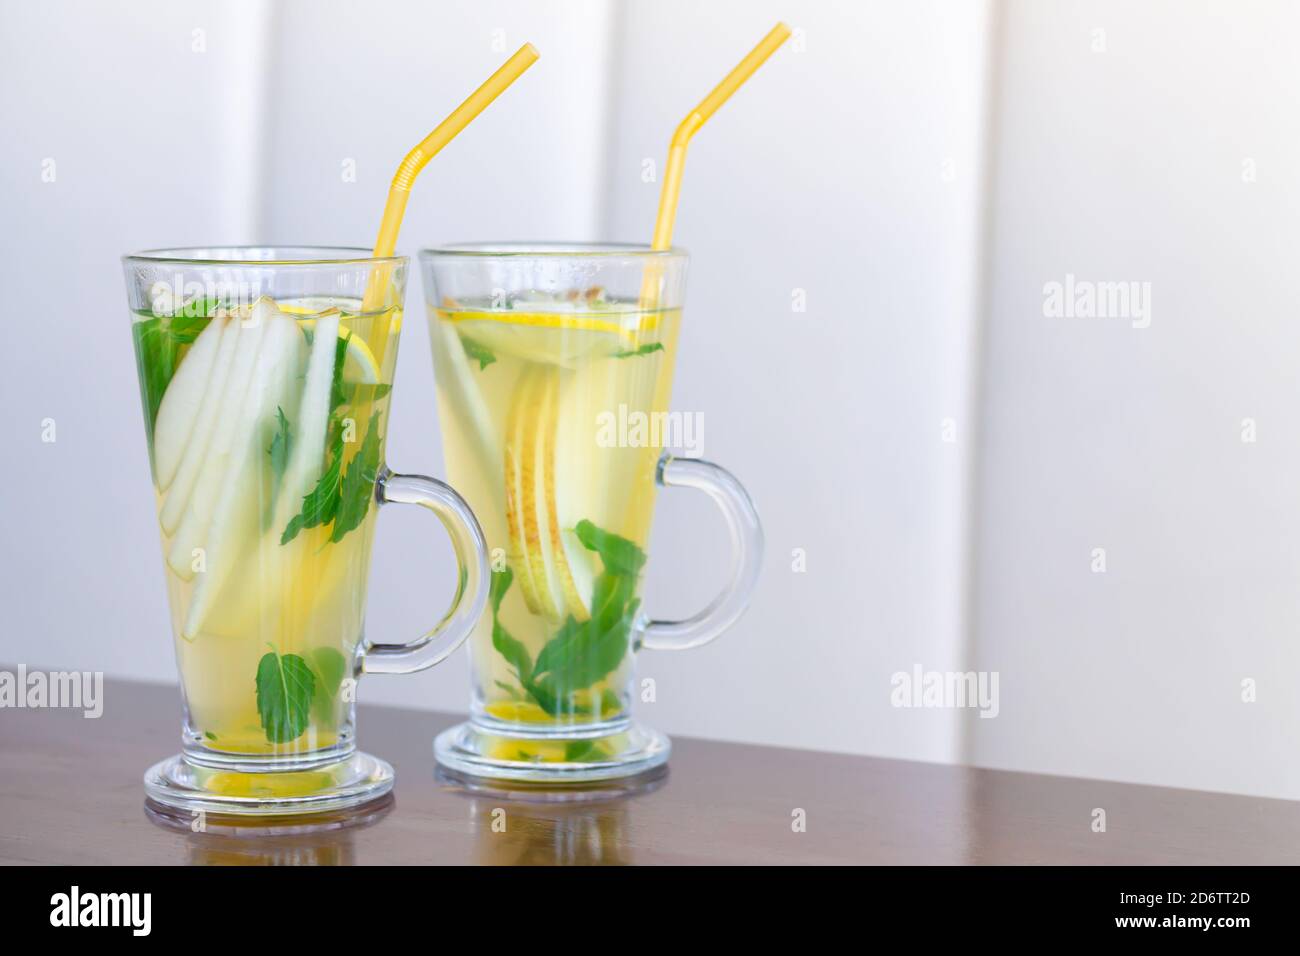 https://c8.alamy.com/comp/2D6TT2D/two-glass-cups-of-fruit-tea-with-mint-lemon-pear-honey-and-ginger-on-wooden-table-2D6TT2D.jpg